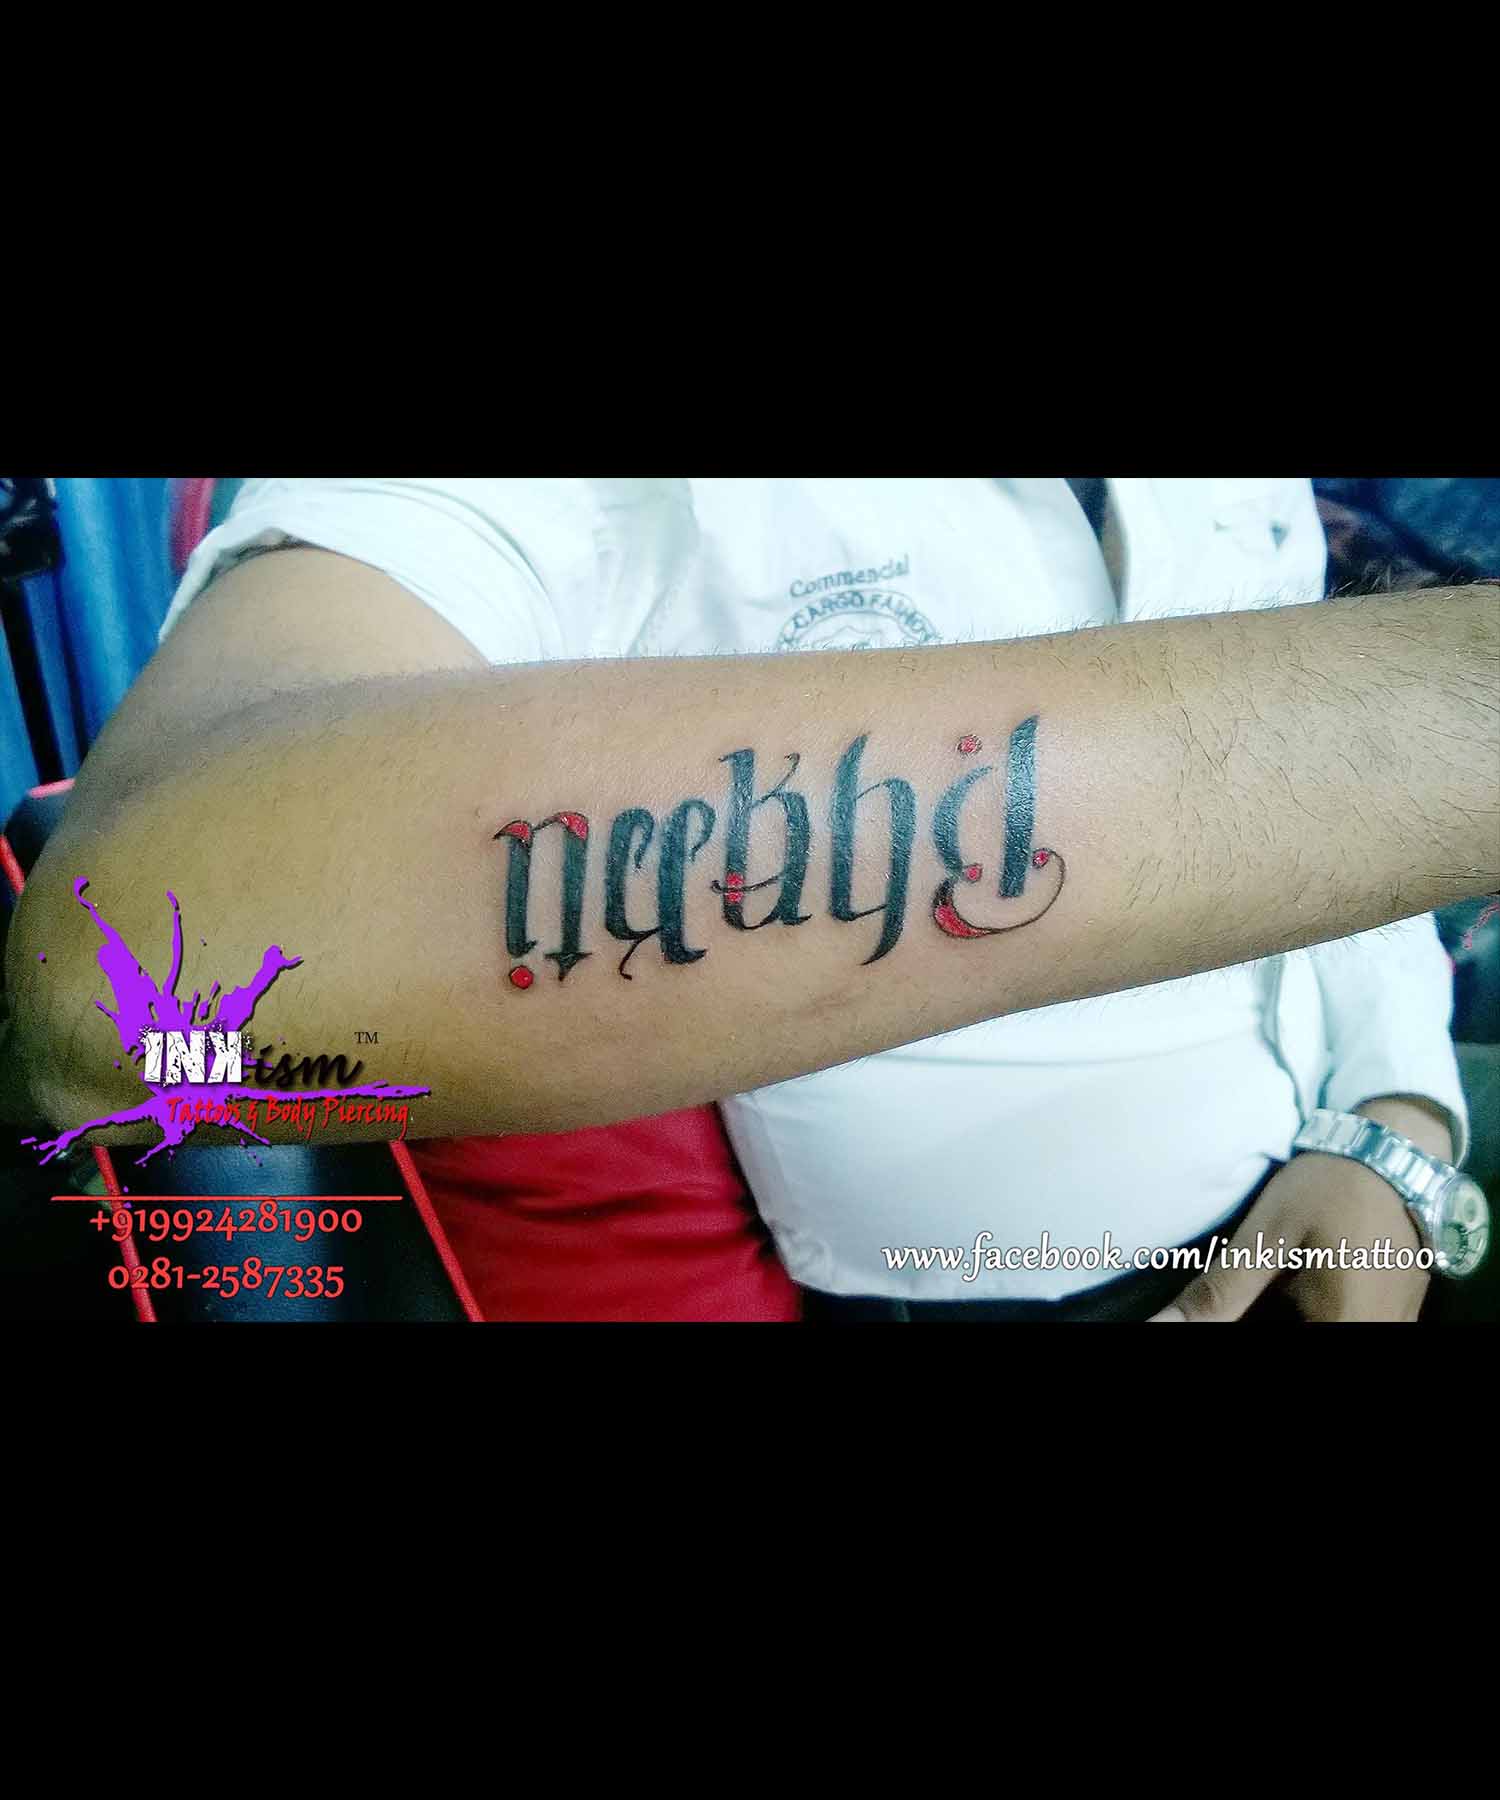 Name ambigram calligraphy tattoo, Name tattoo, Ambigram tattoo, Calligraphy tattoo, Inkism tattoo and body piercing rajkot gujarat